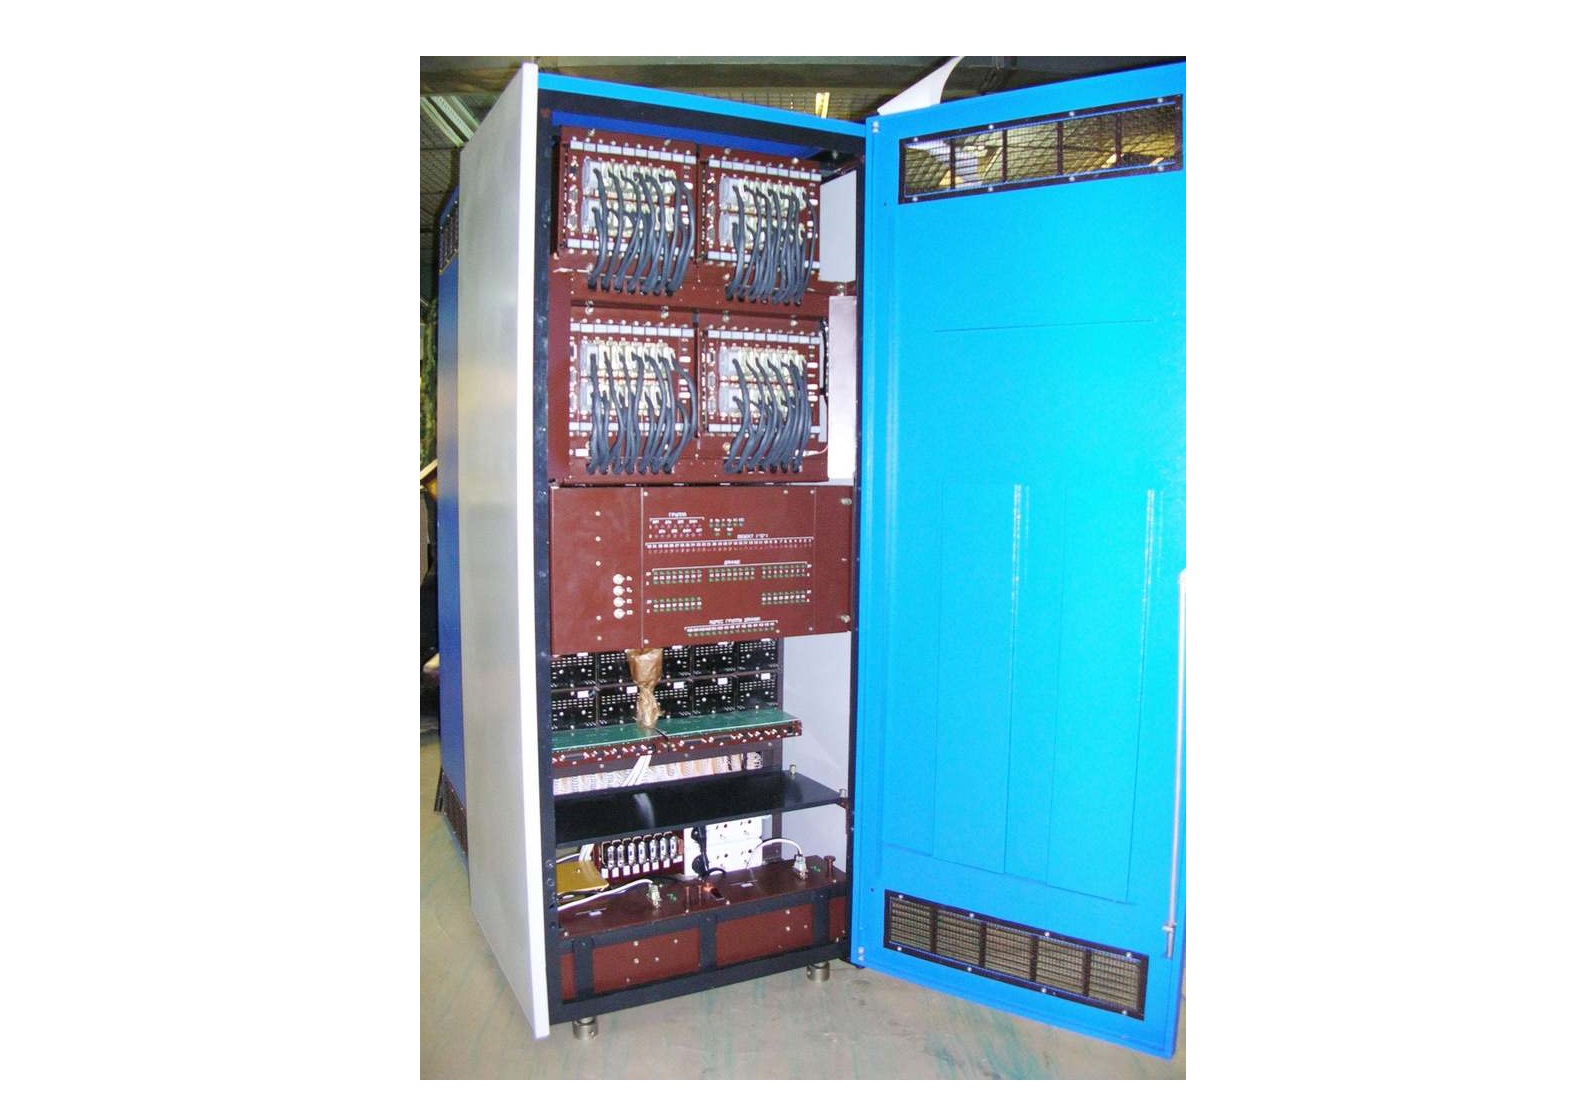 Sistem kontrol prosesor mikro MSTU